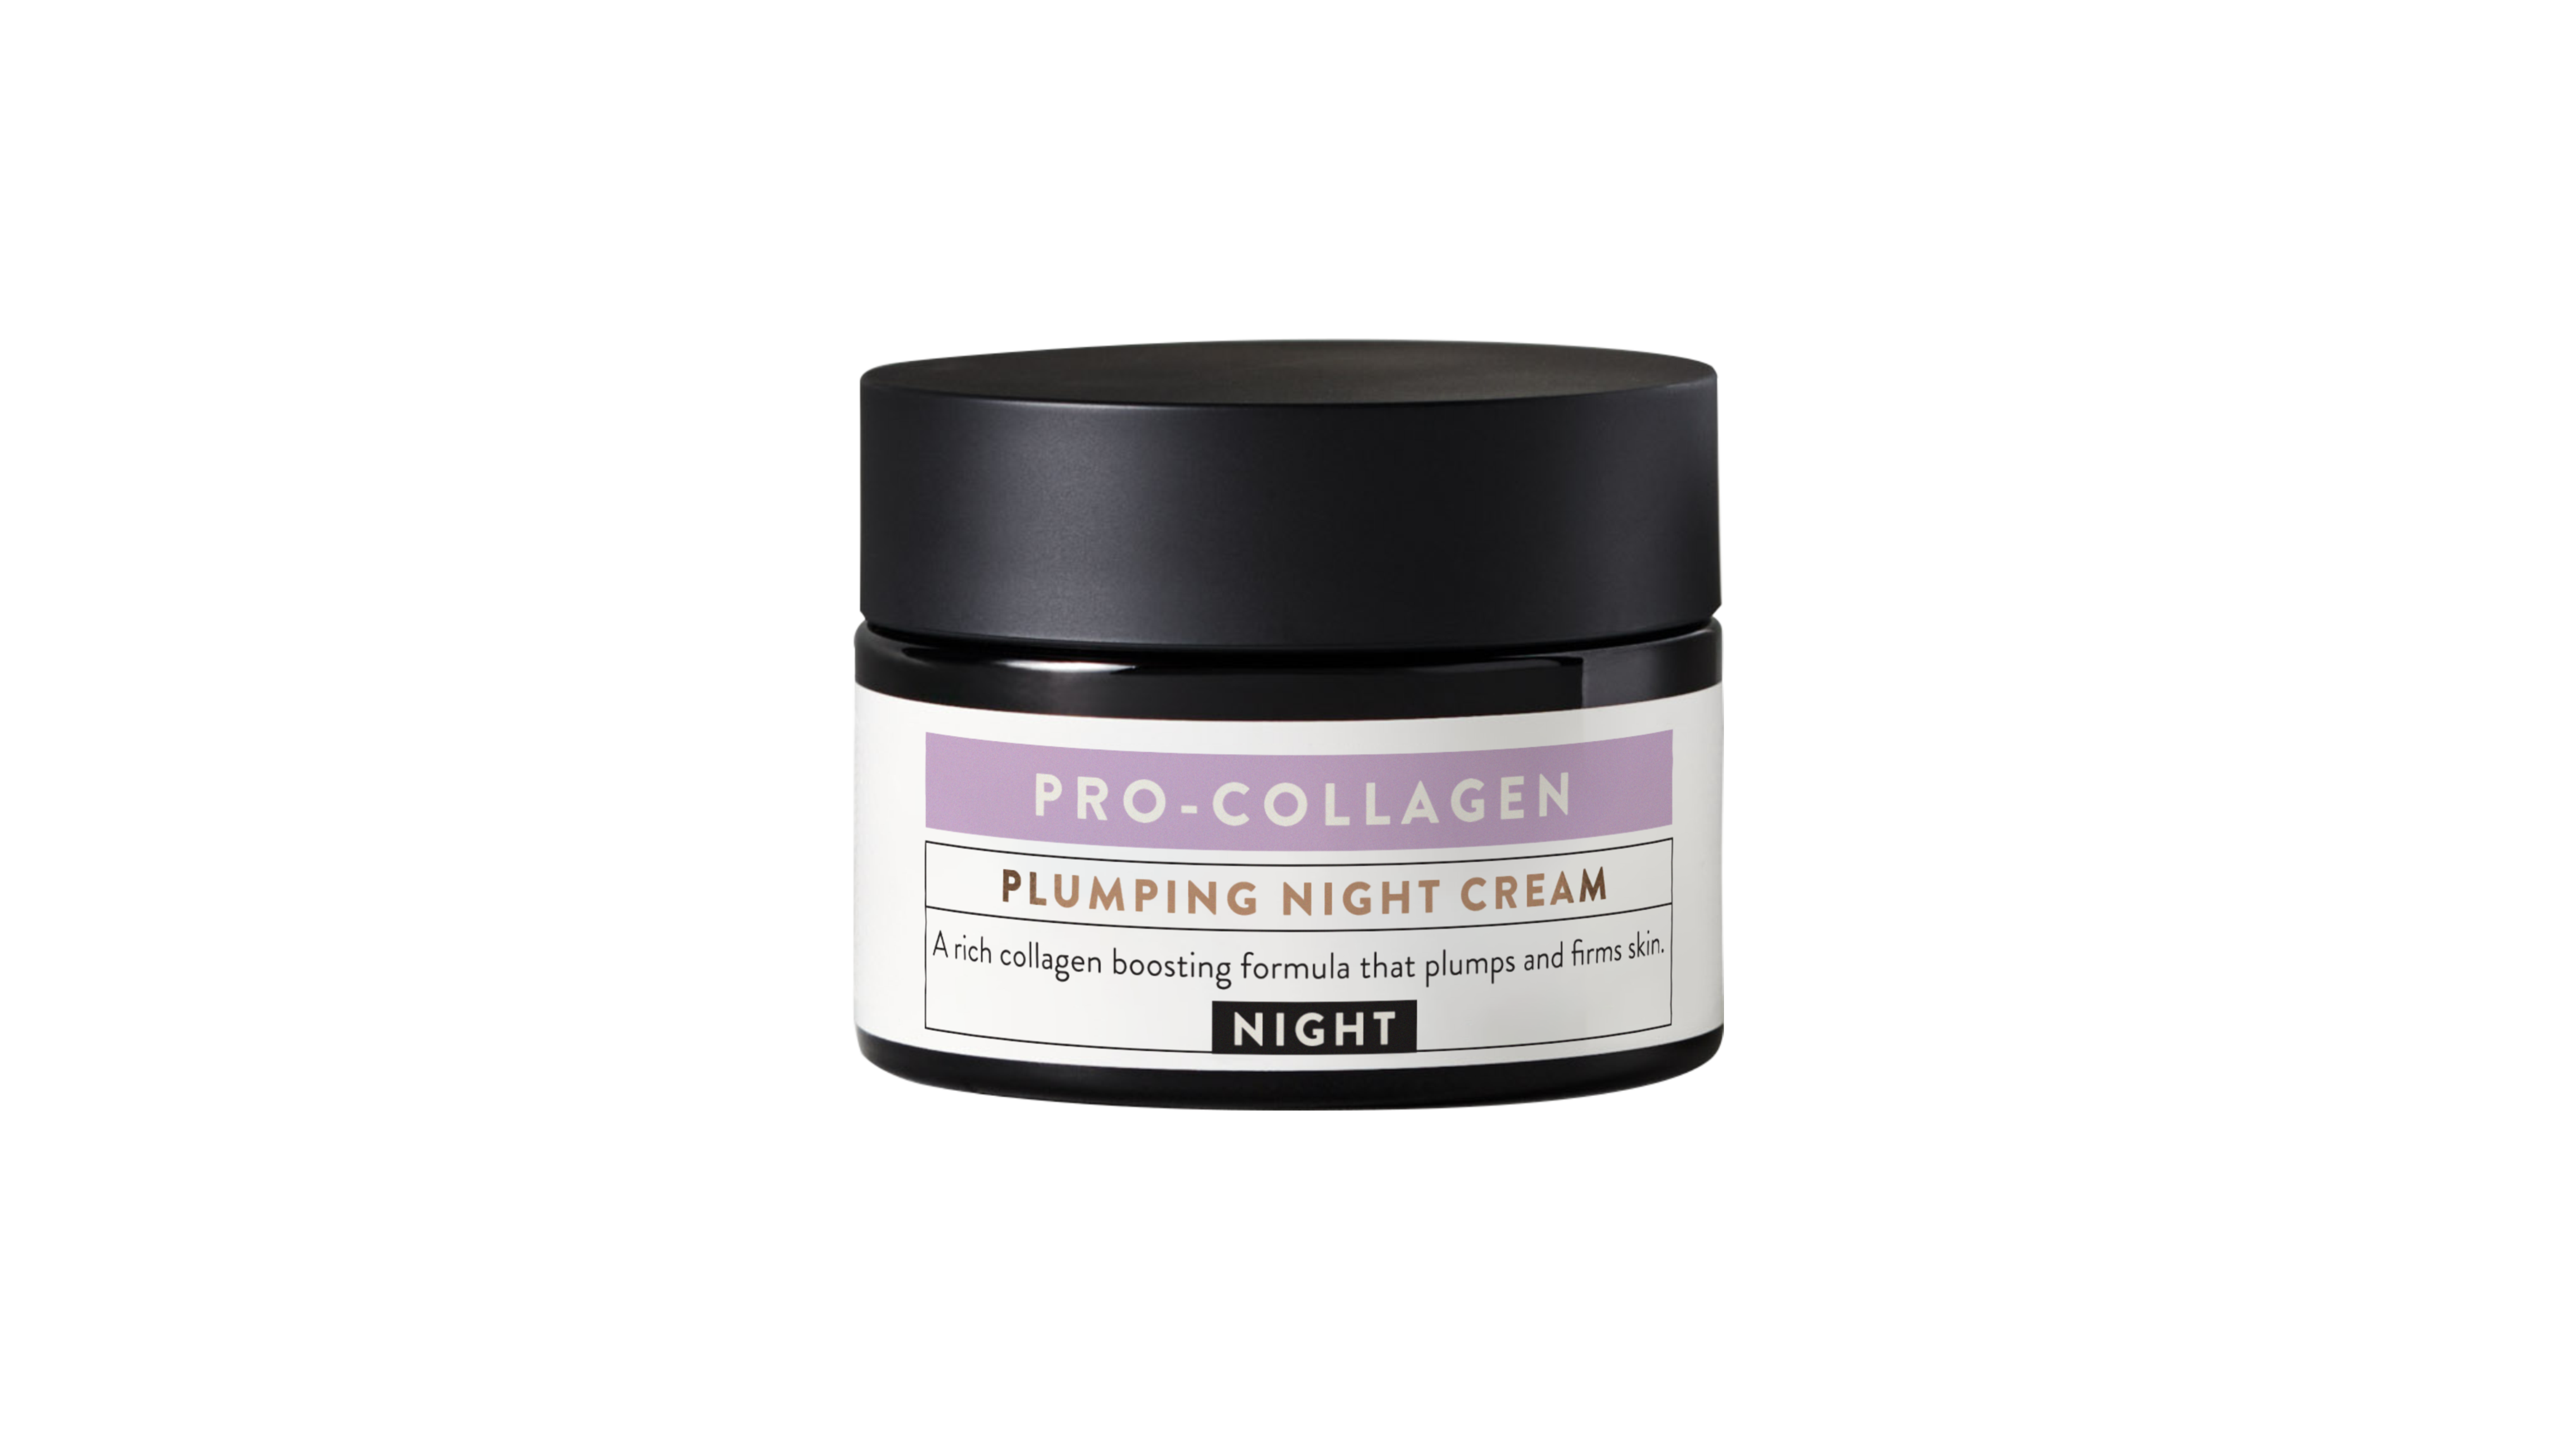 Pro-Collagen Plumping Night Cream